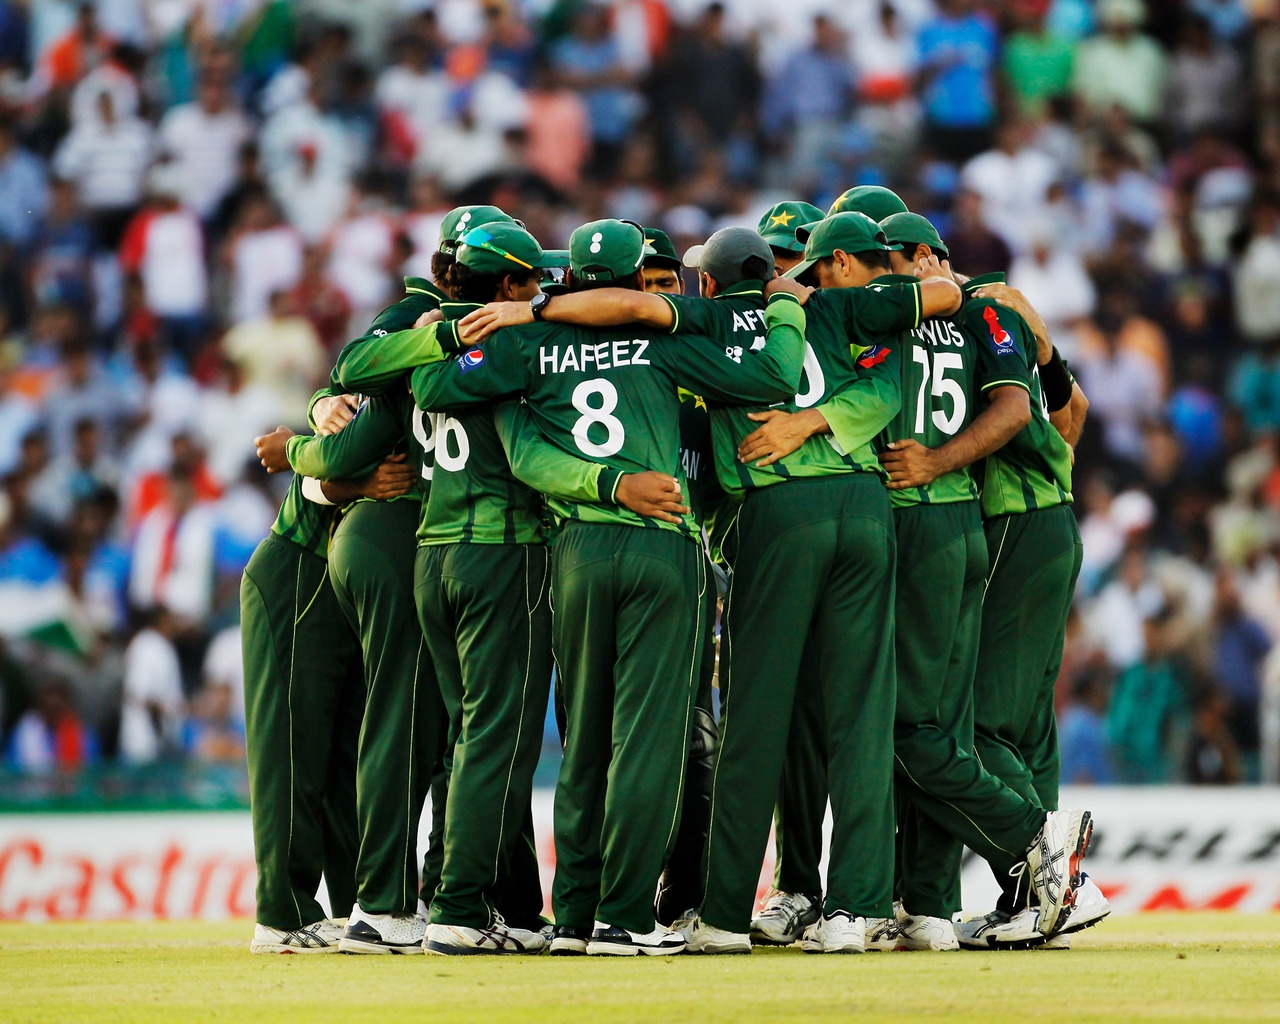 Pakistan Cricket Team for 1280 x 1024 resolution